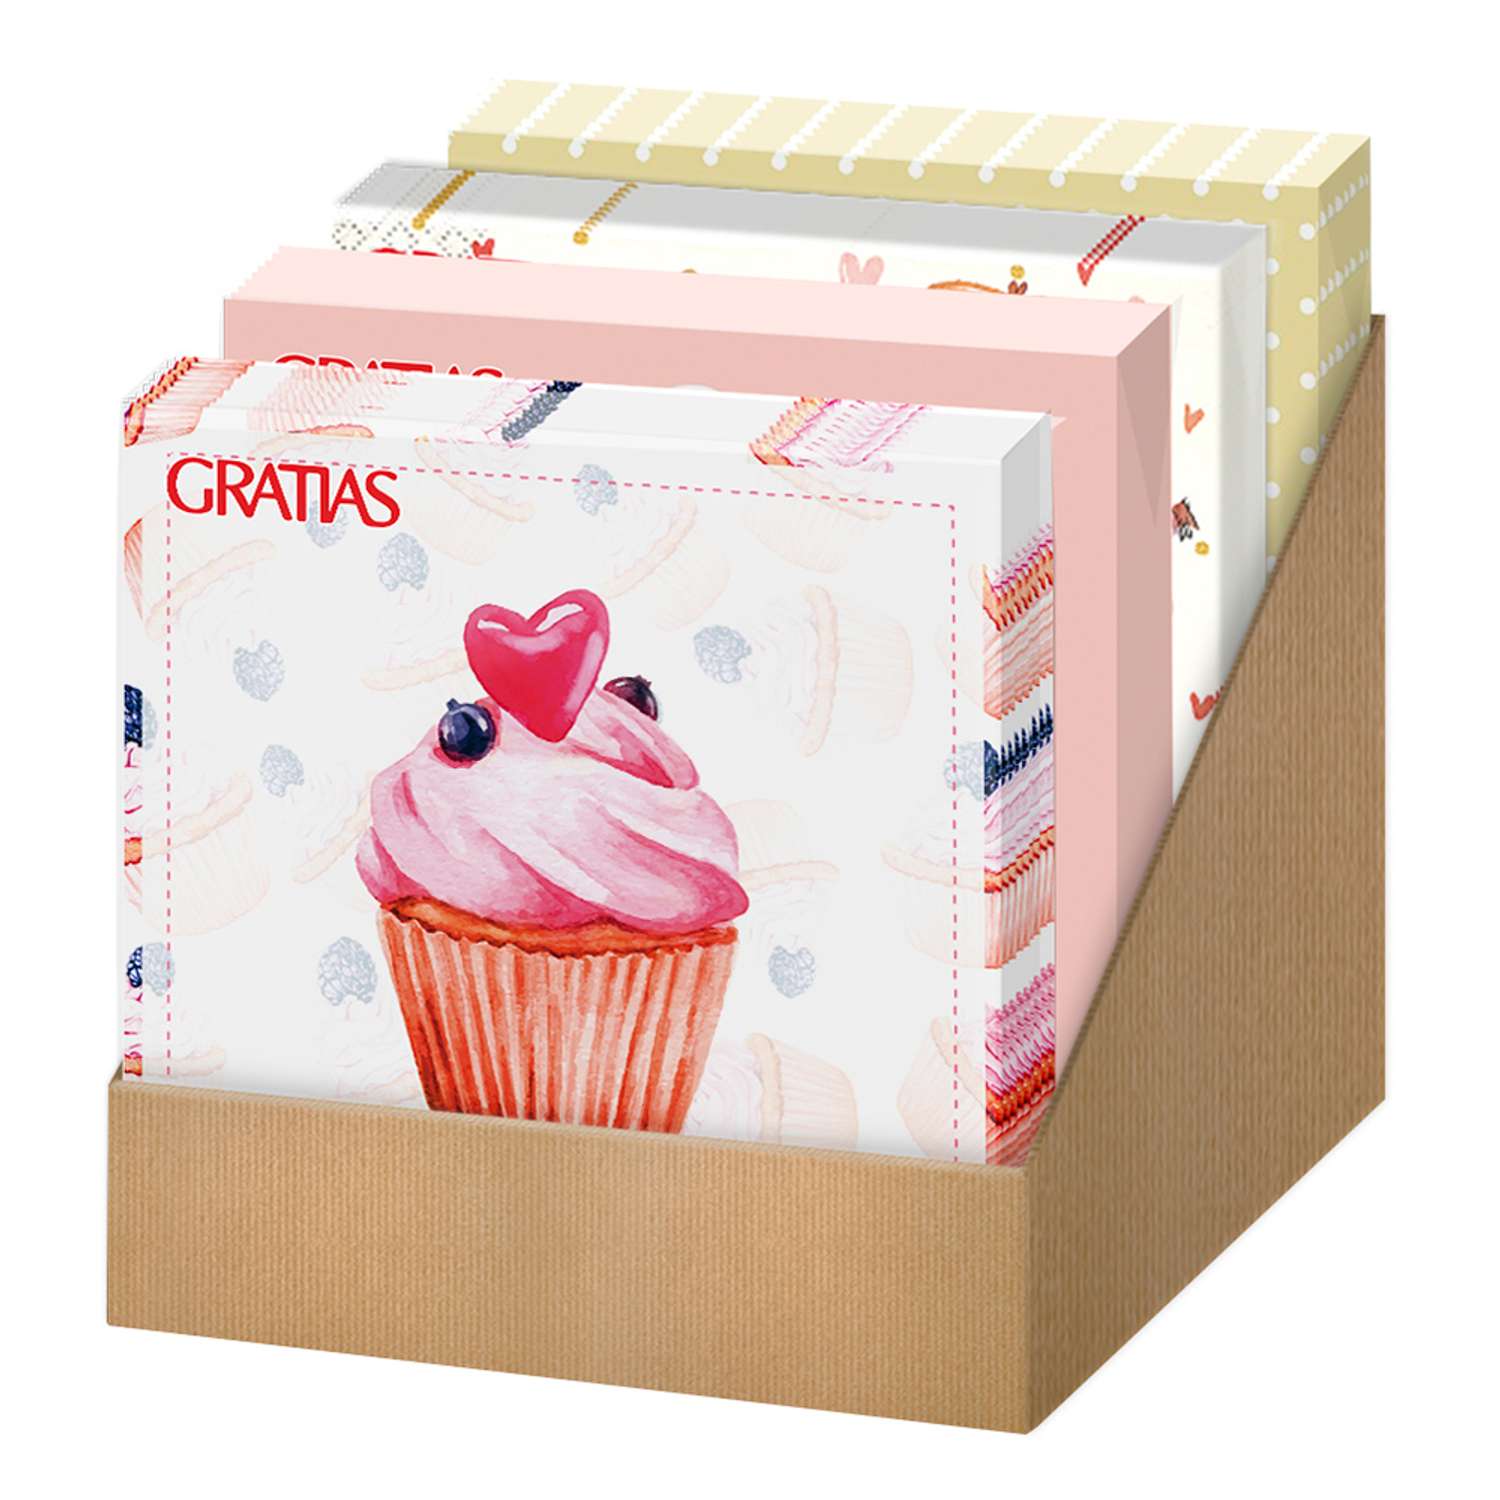 Бумажные салфетки Gratias Box mix Романтика 4 пачки - фото 1